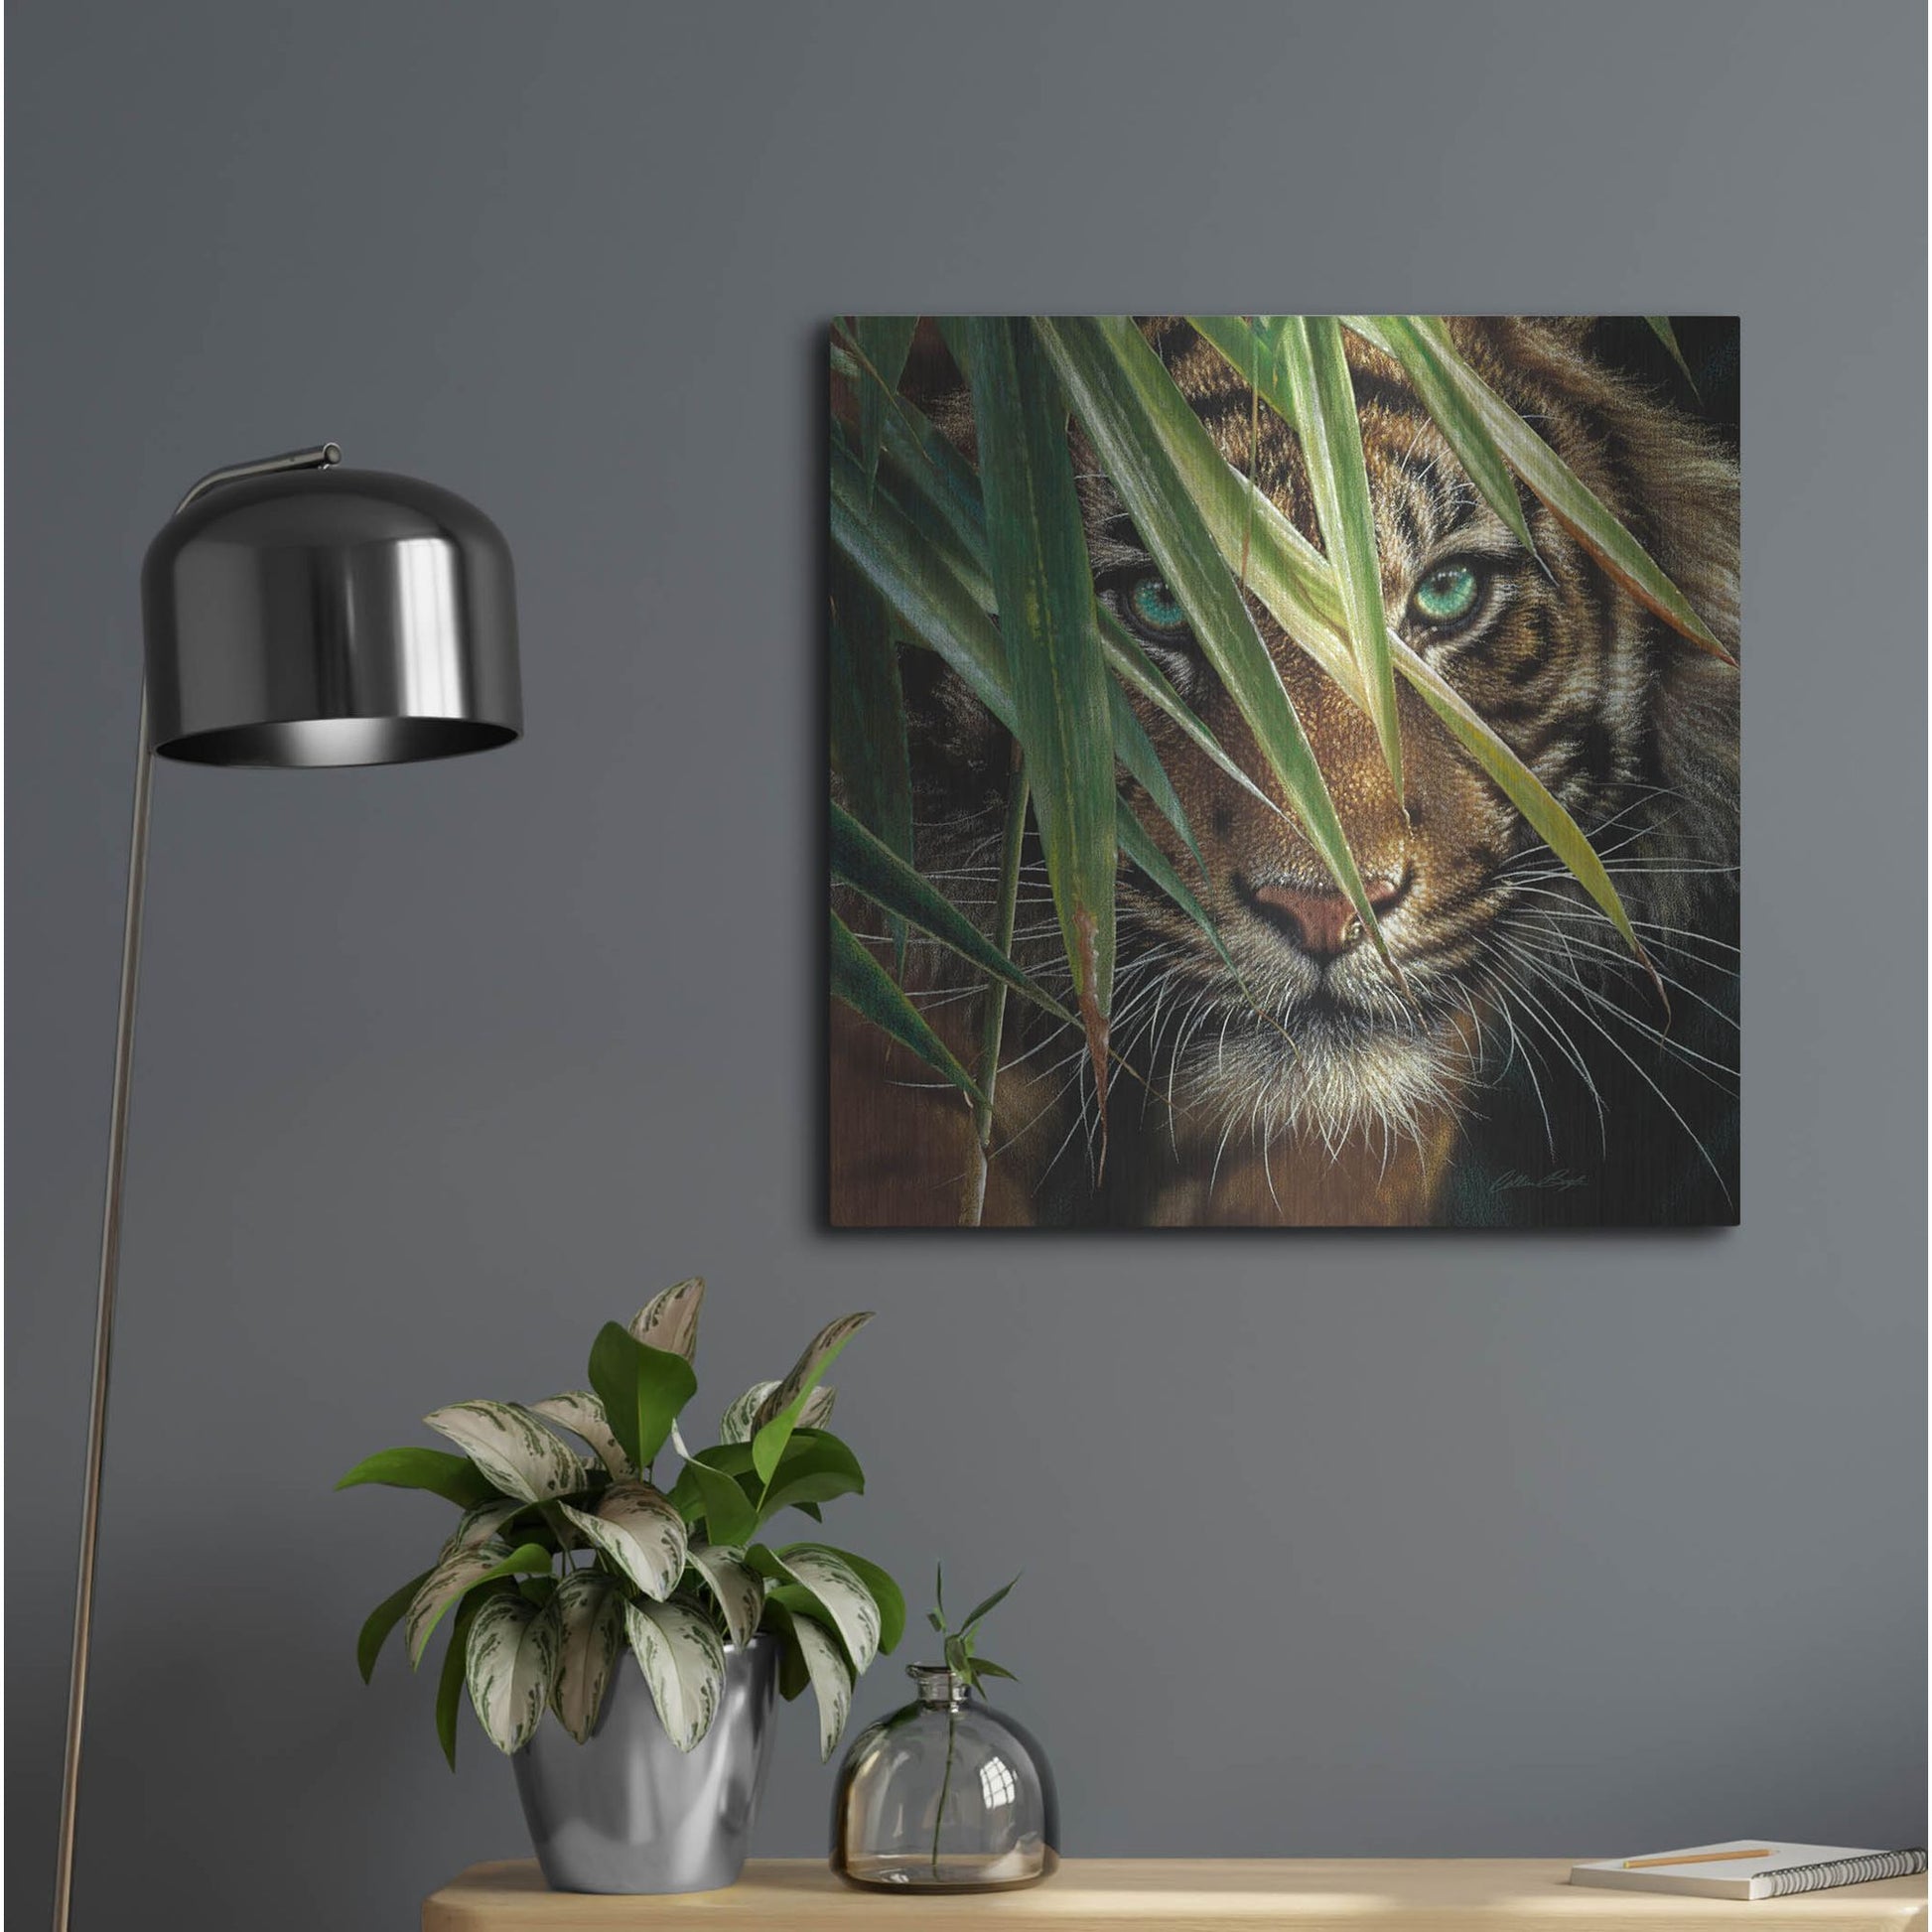 Luxe Metal Art 'Tiger Eyes' by Collin Bogle, Metal Wall Art,24x24